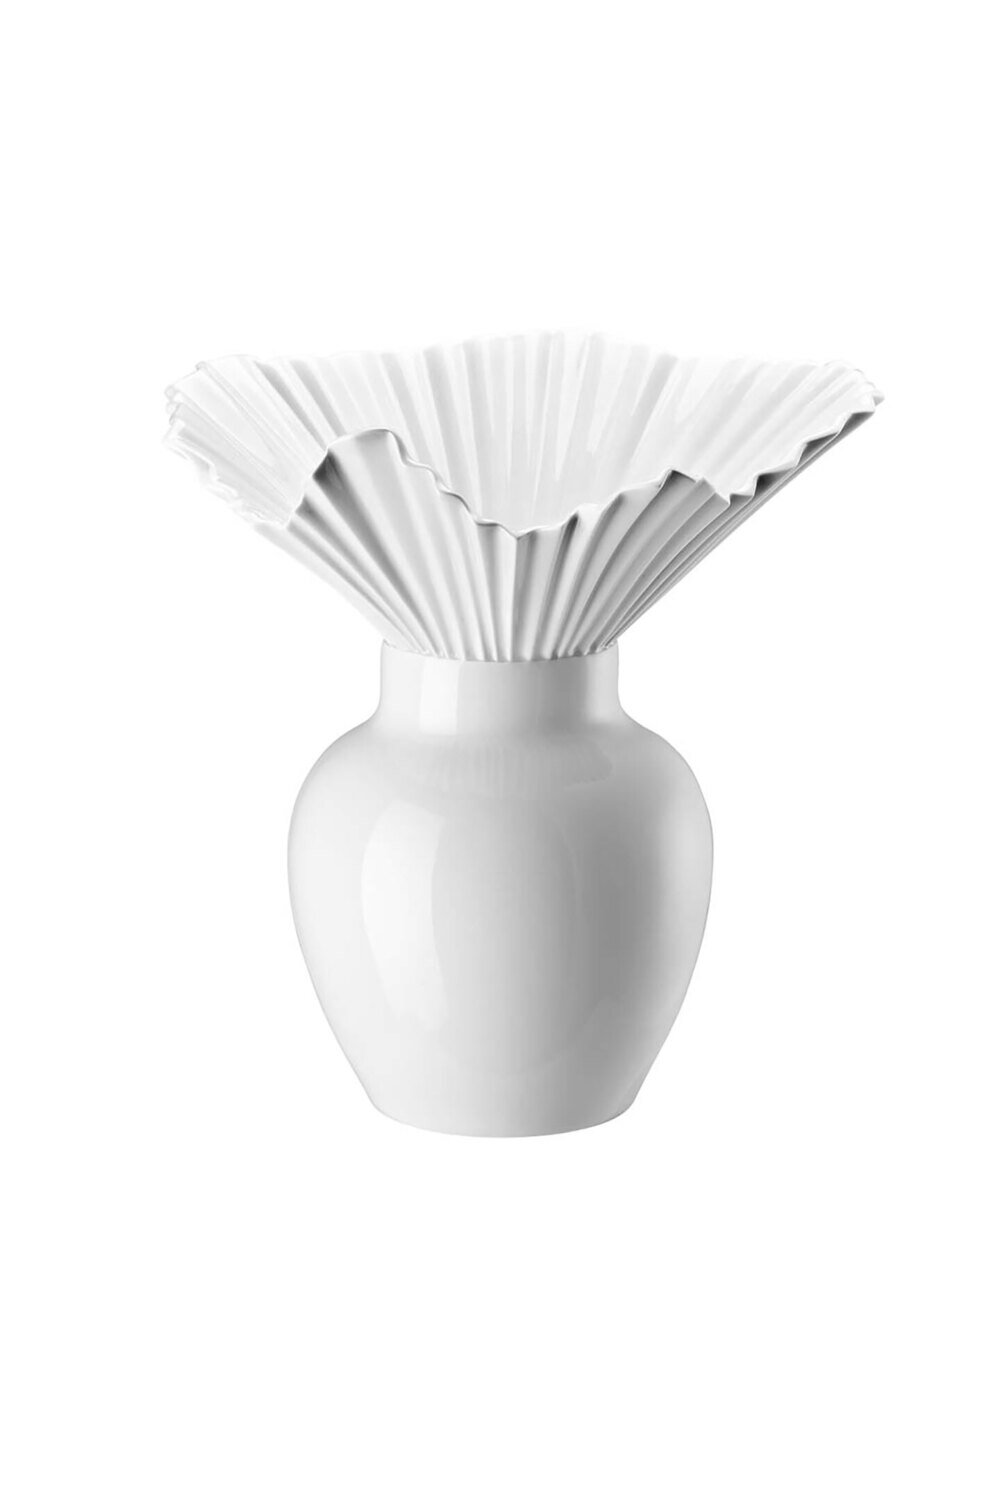 Rosenthal Falda Vase 10 1/2 Inch